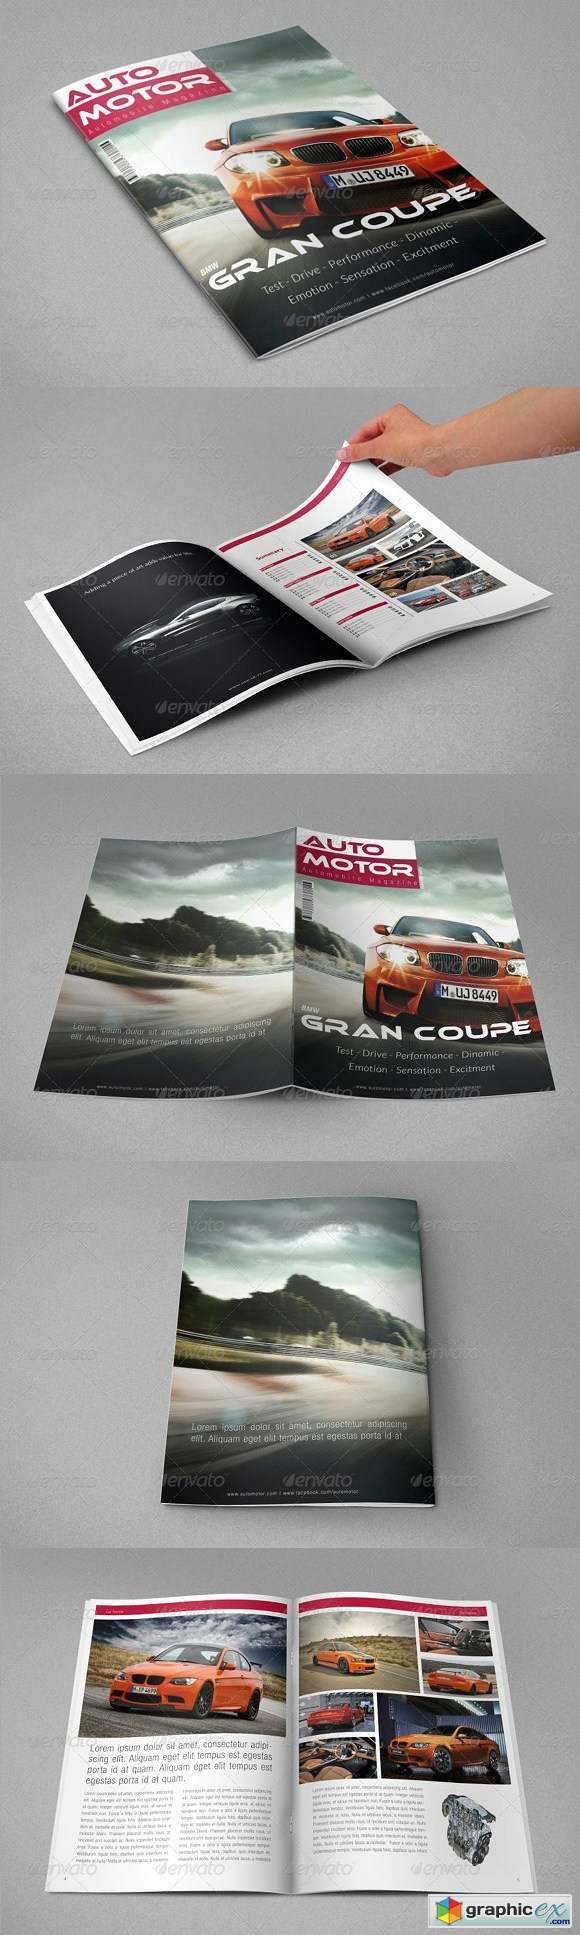 Auto Motor - Automobile Magazine